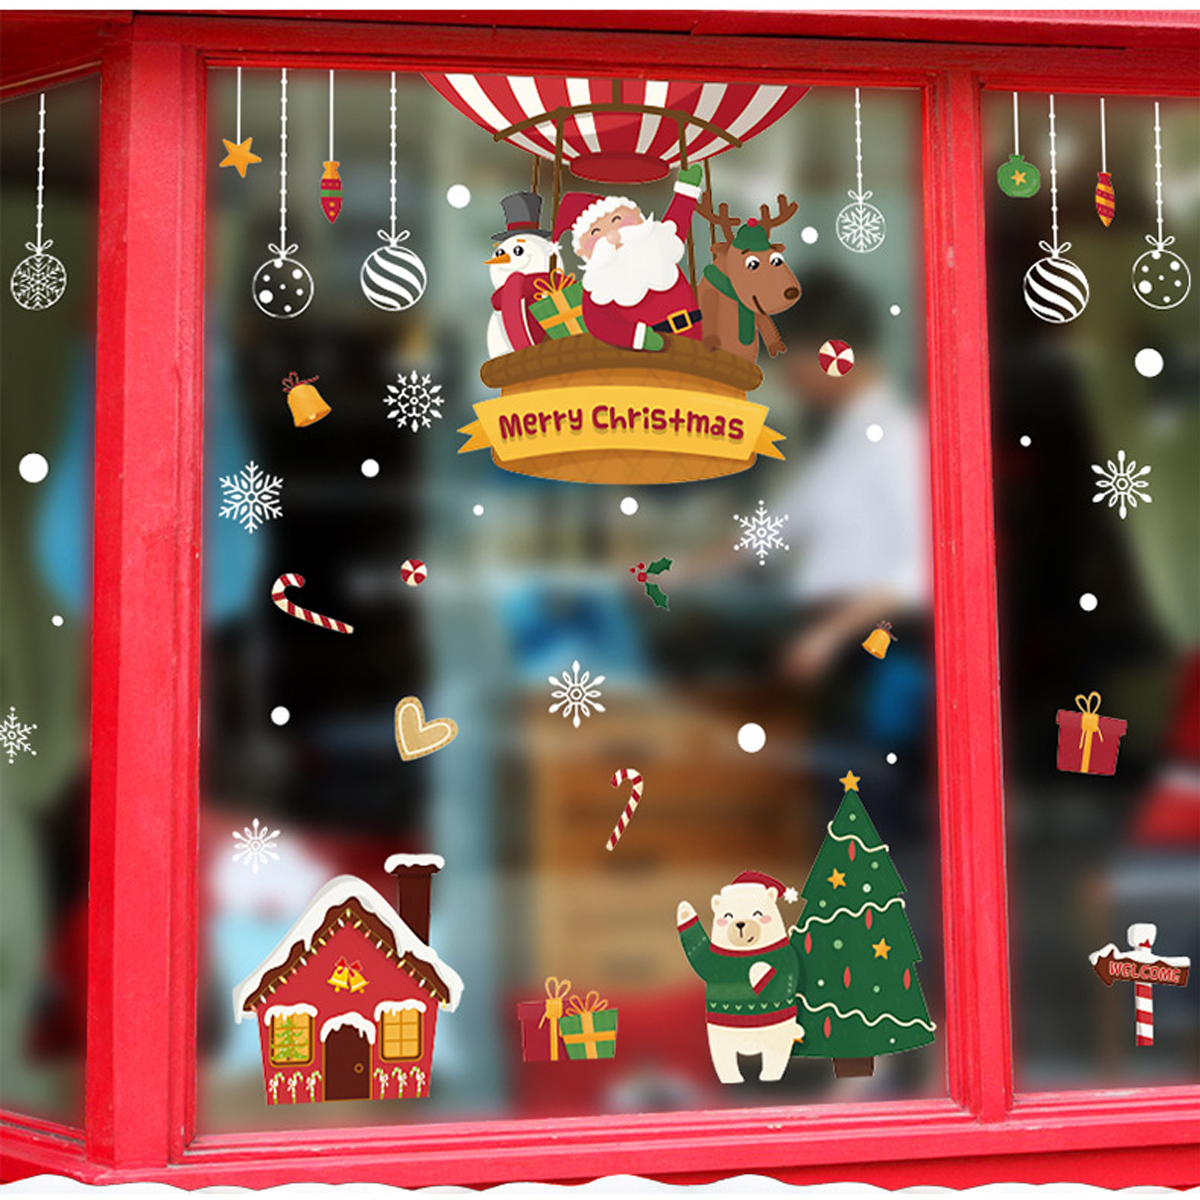 2020-Christmas-Decoration-Sticker-Glass-windows-Decals-Merry-Christmas-Home-Decoration-Wall-Stickers-1764899-7